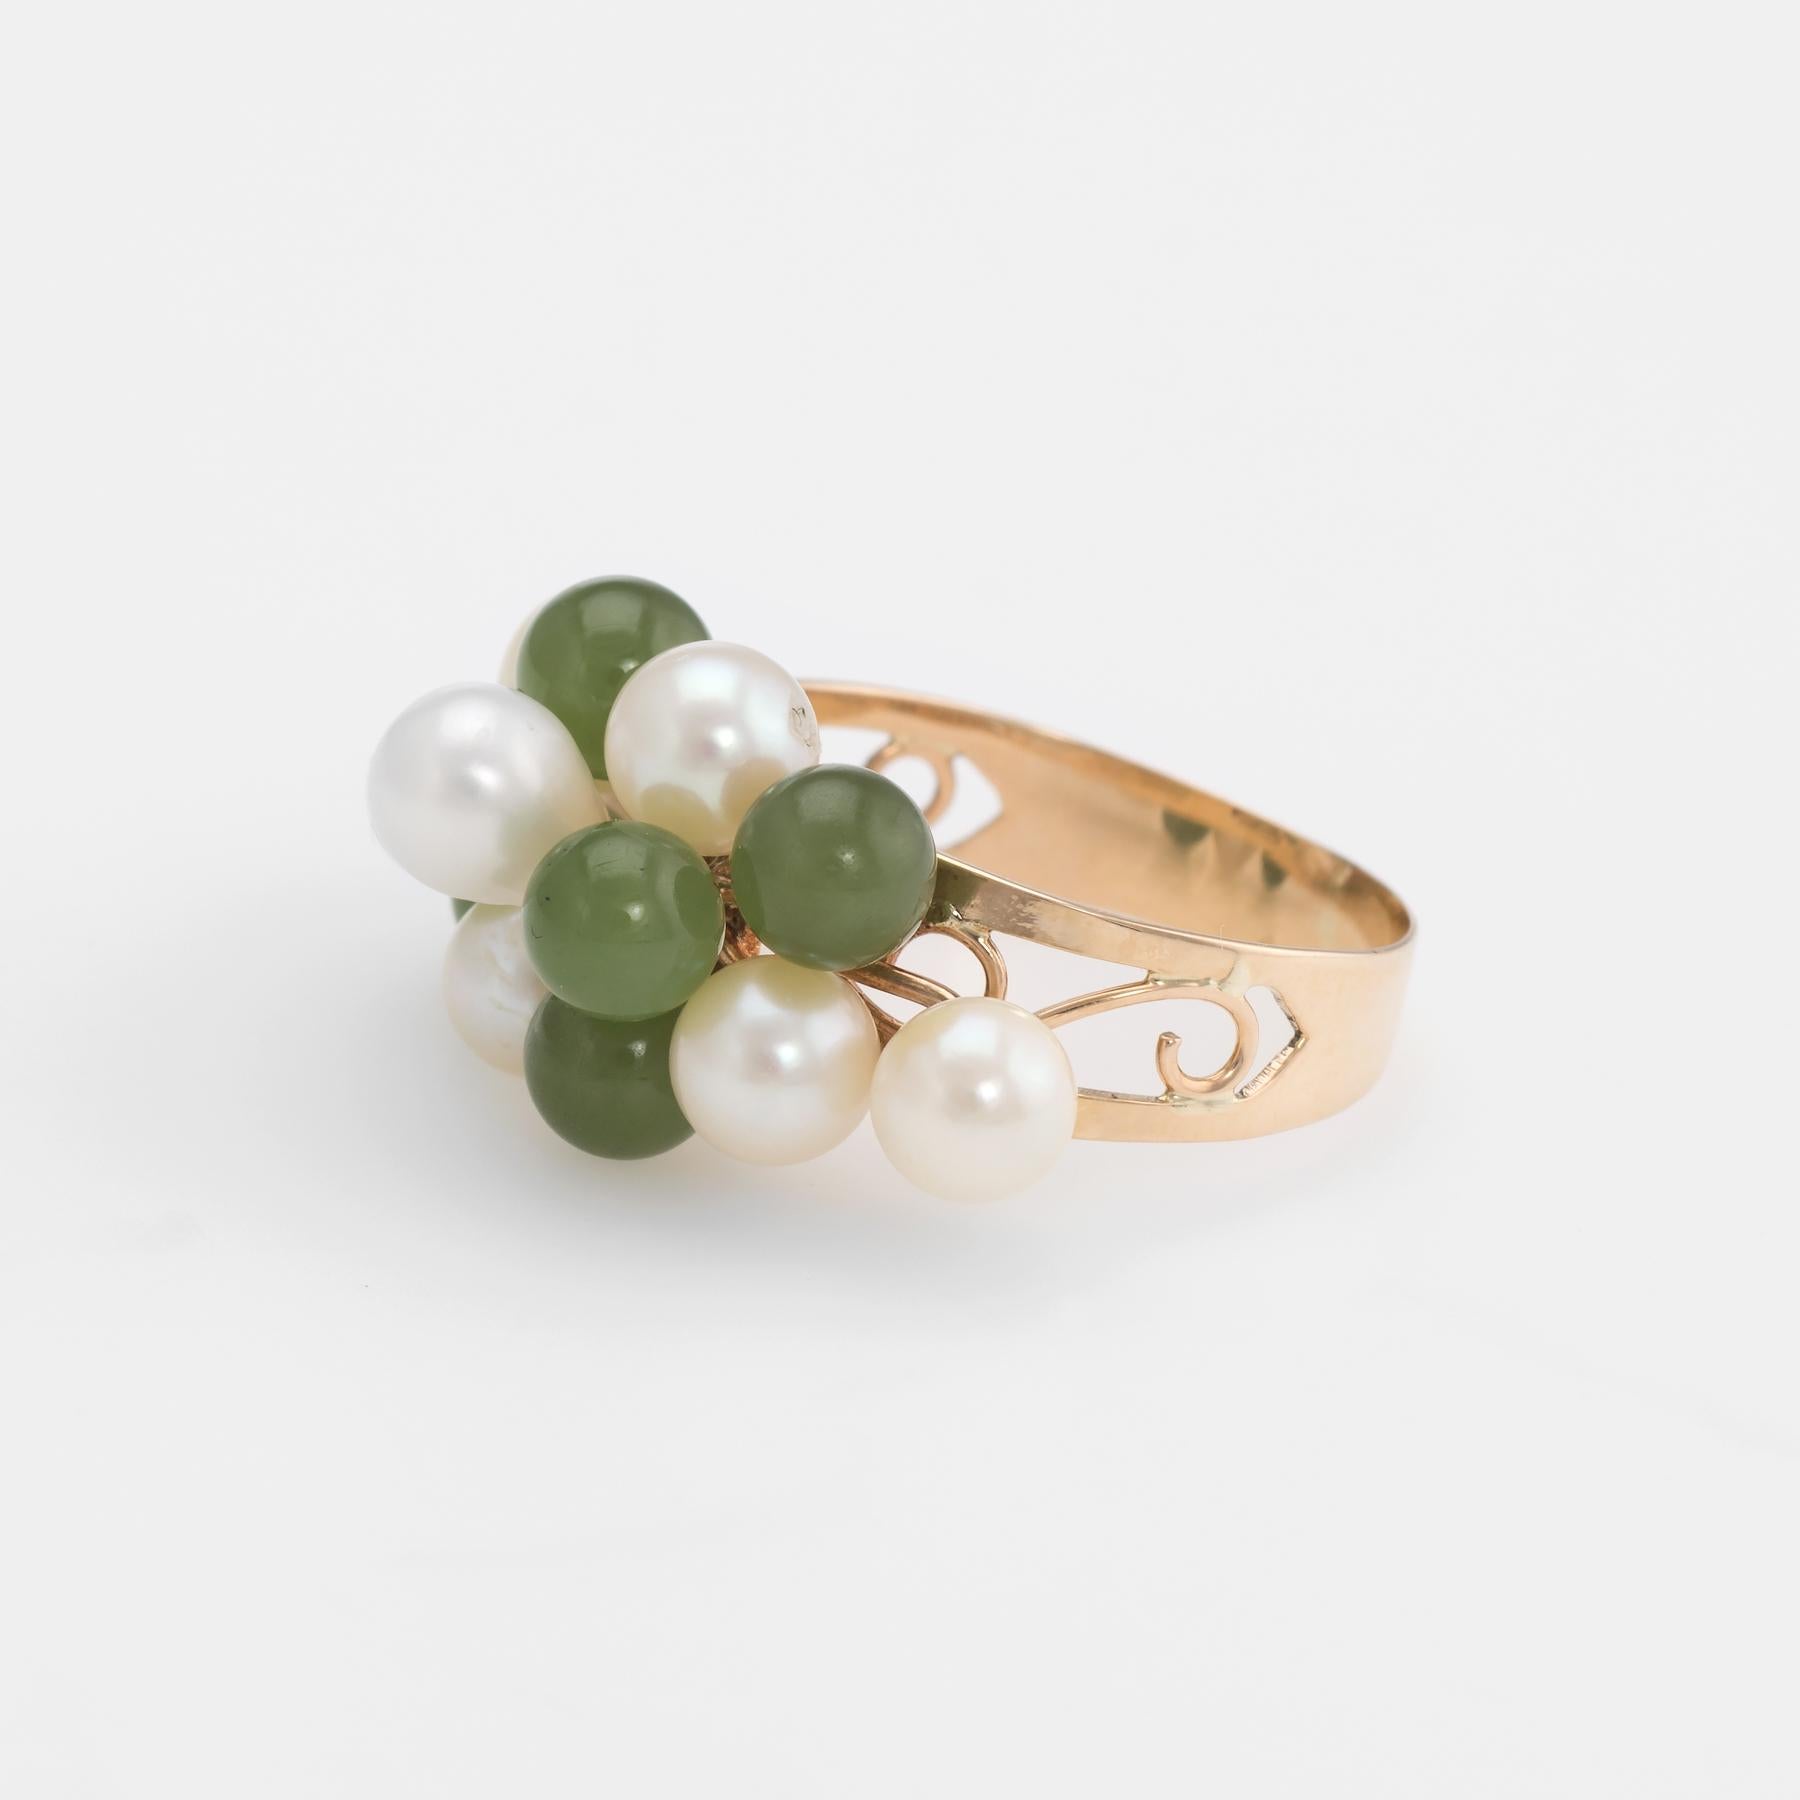 Round Cut Vintage Jade Cultured Pearl Ring 14 Karat Yellow Gold Estate Fine Jewelry